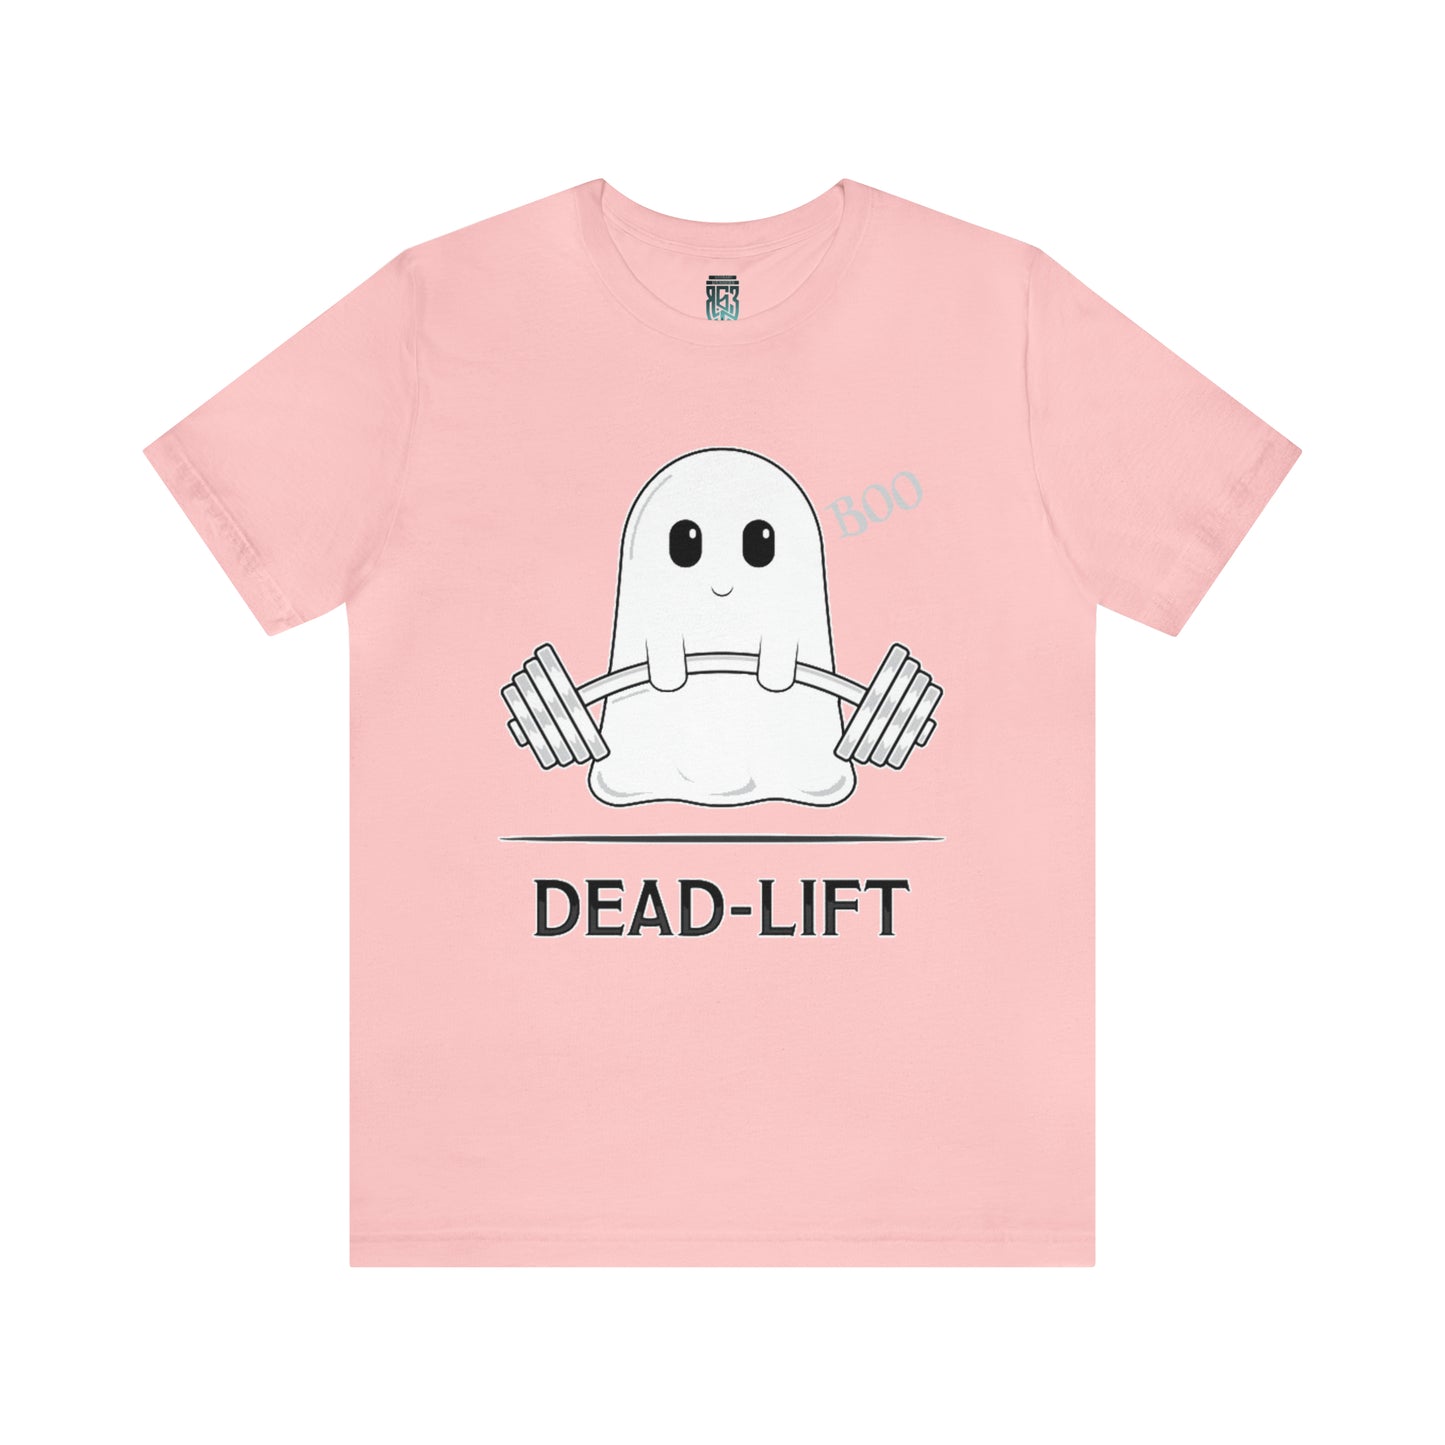 Dead lift